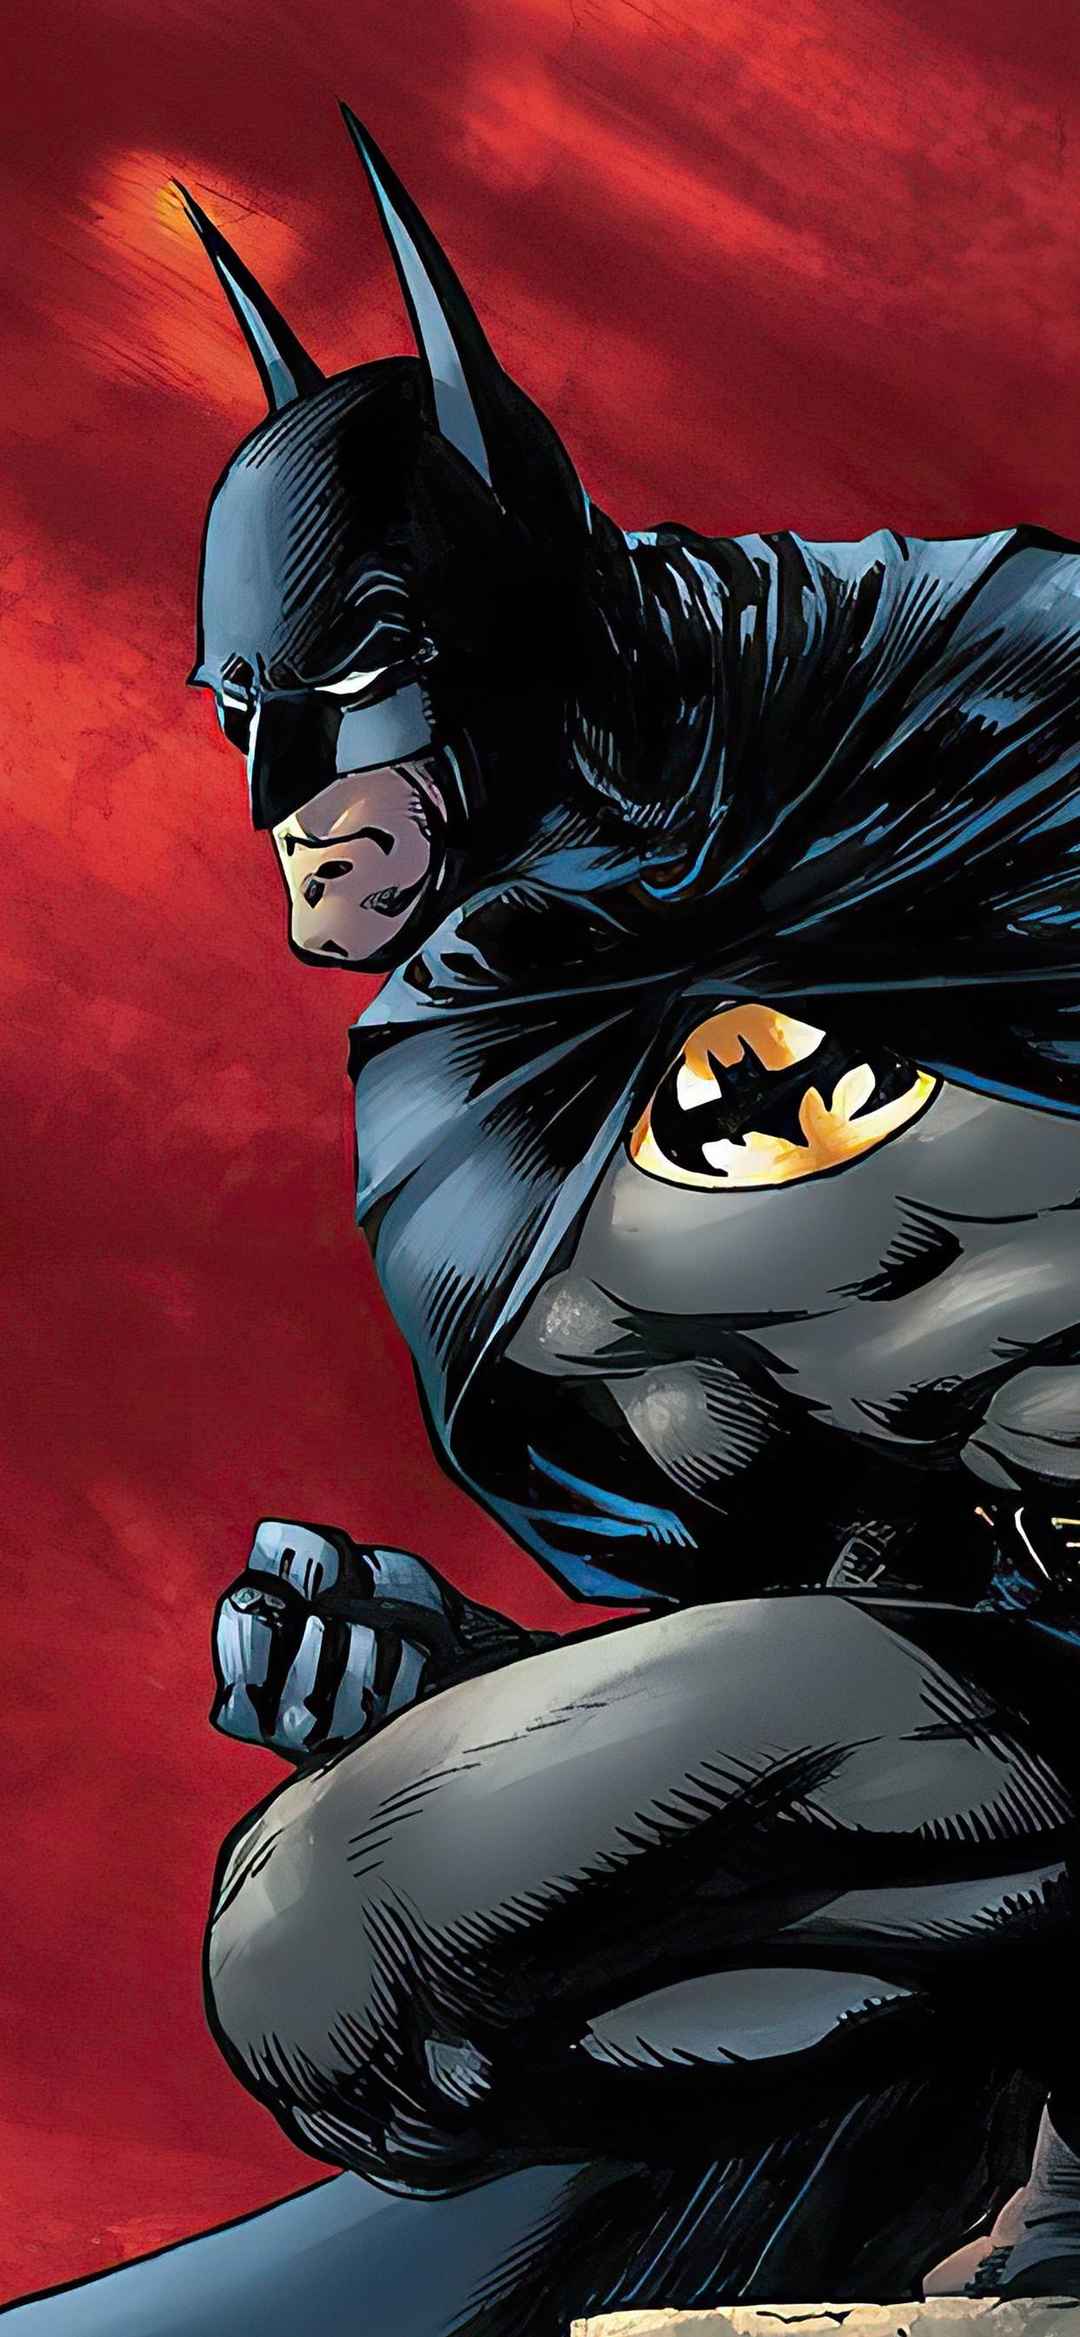 DC超级英雄蝙蝠侠好看又个性的壁纸图片